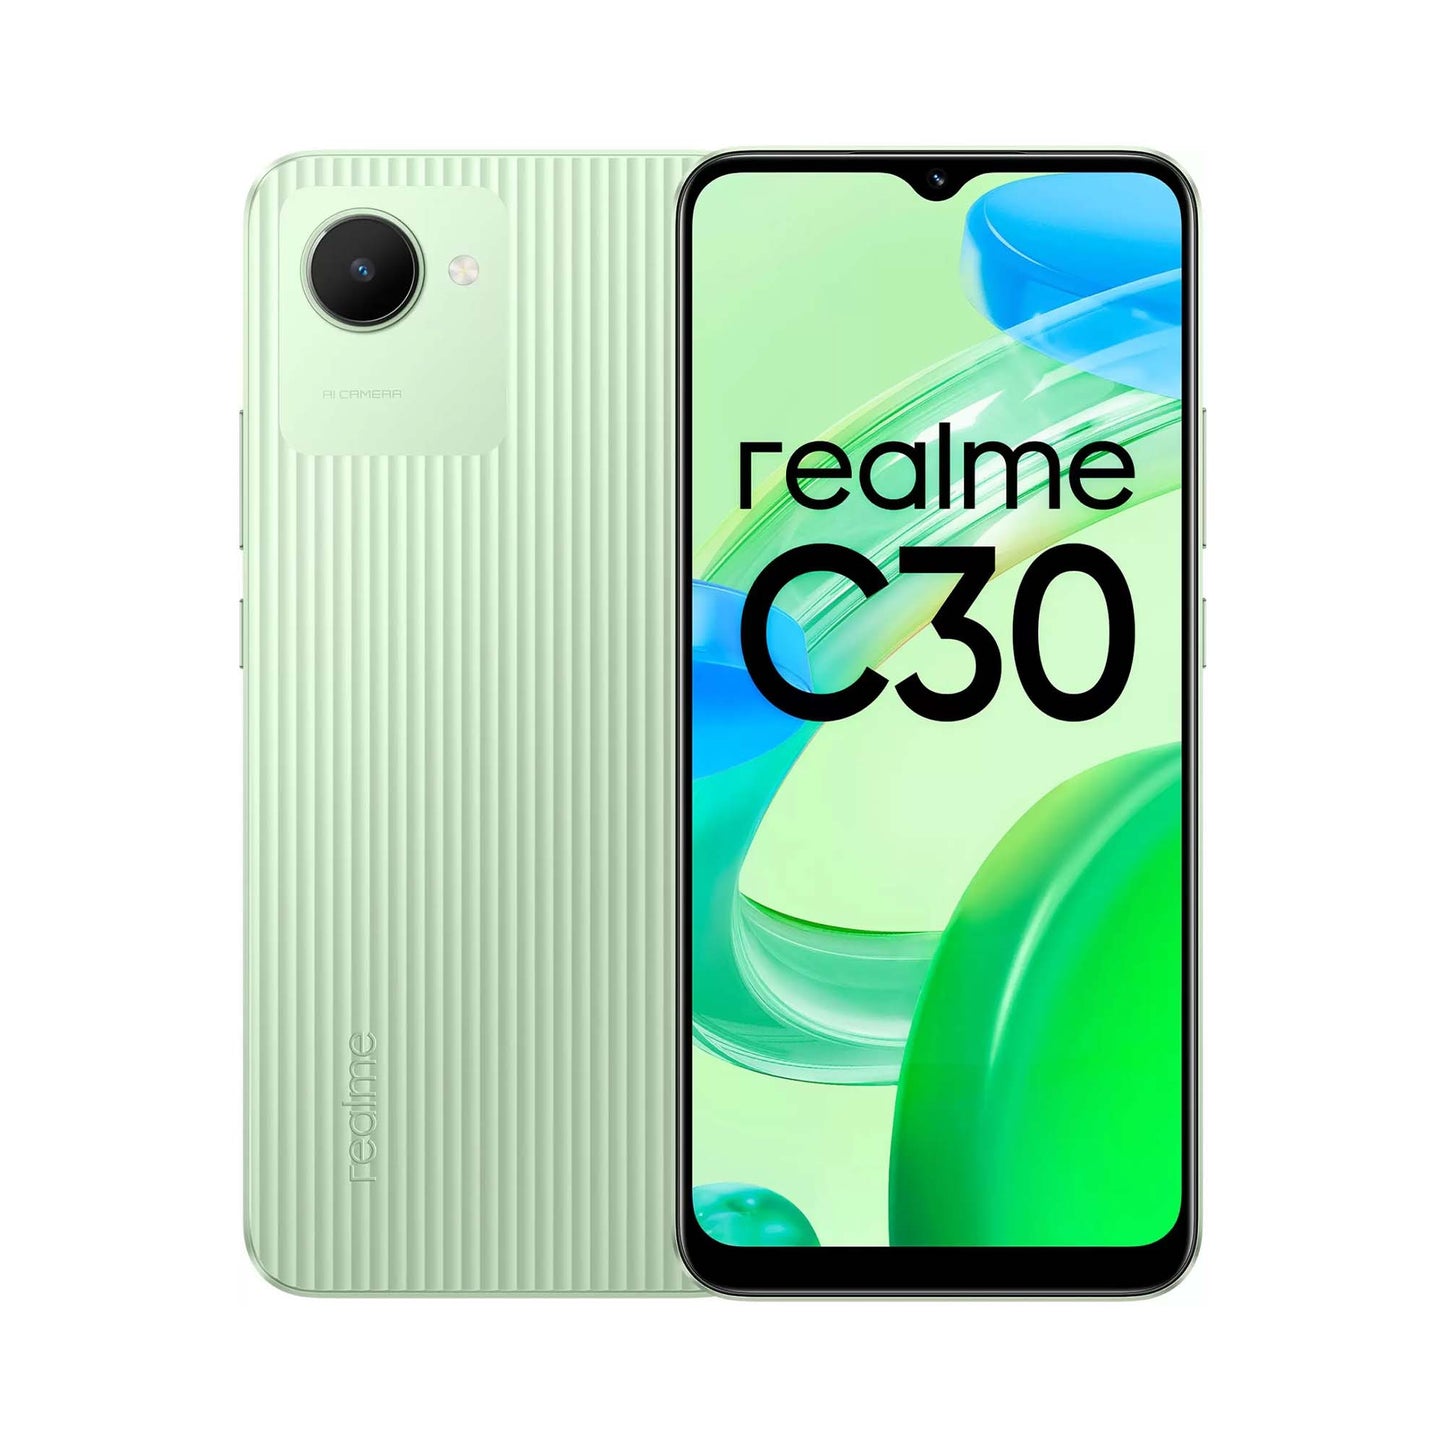 Realme C30